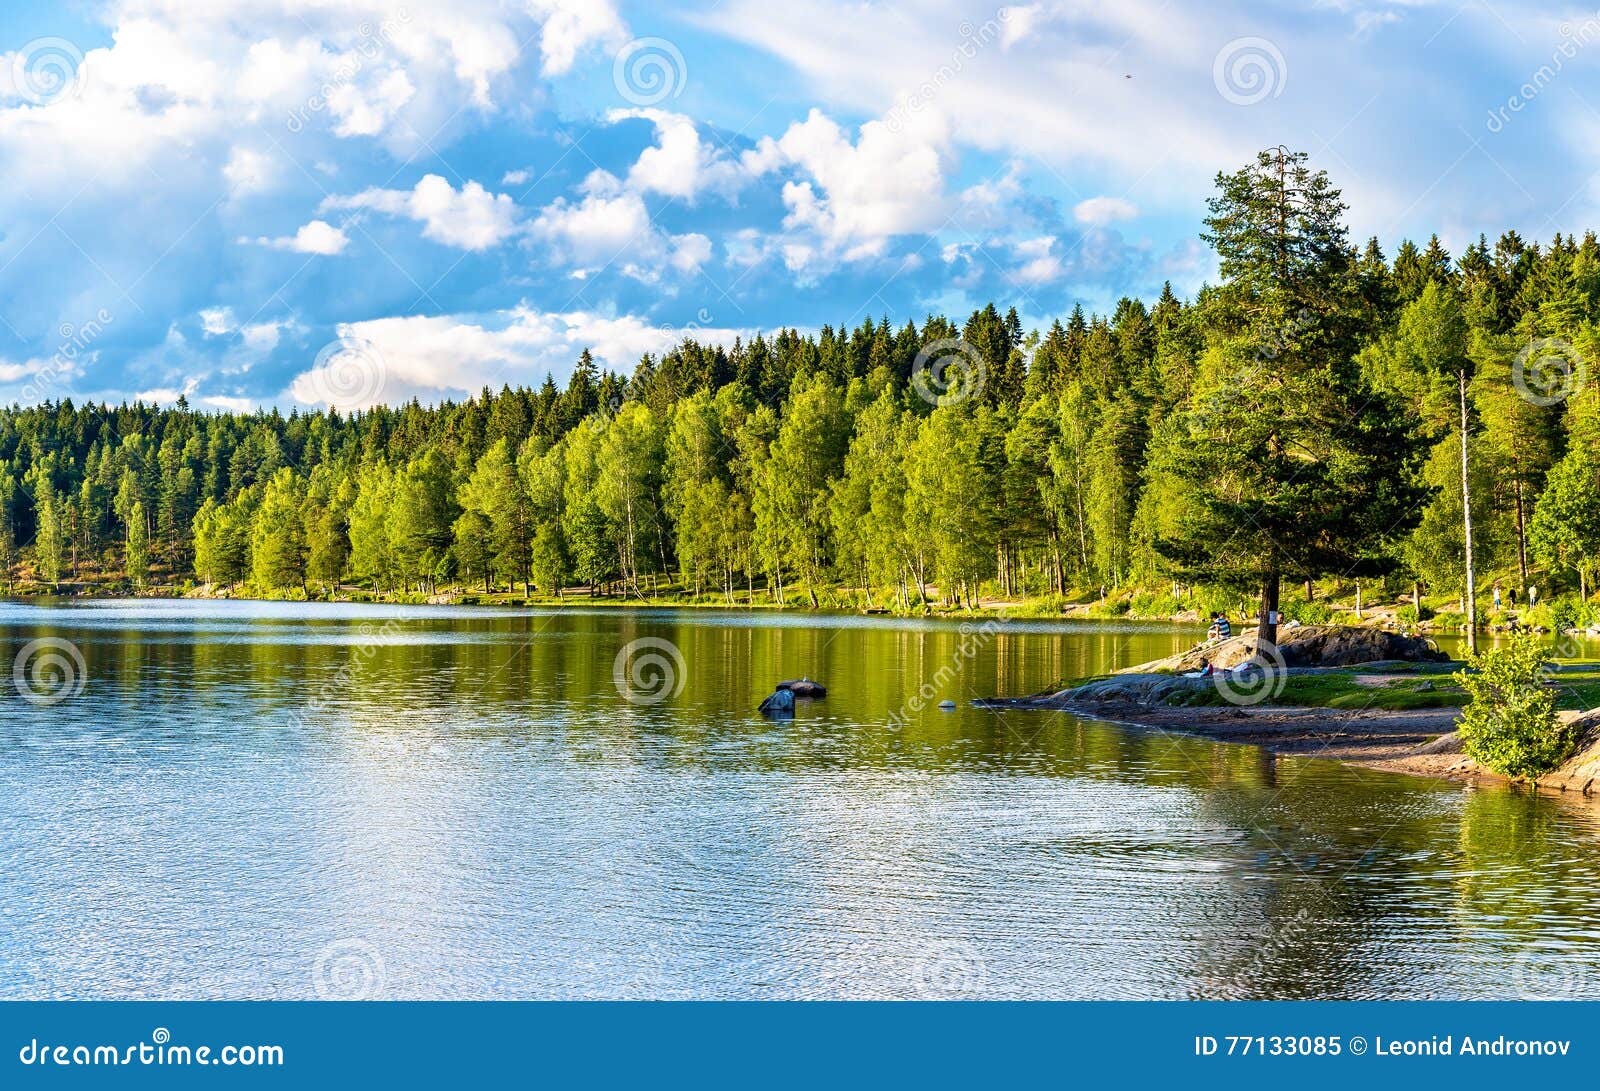 sognsvann lake north of oslo